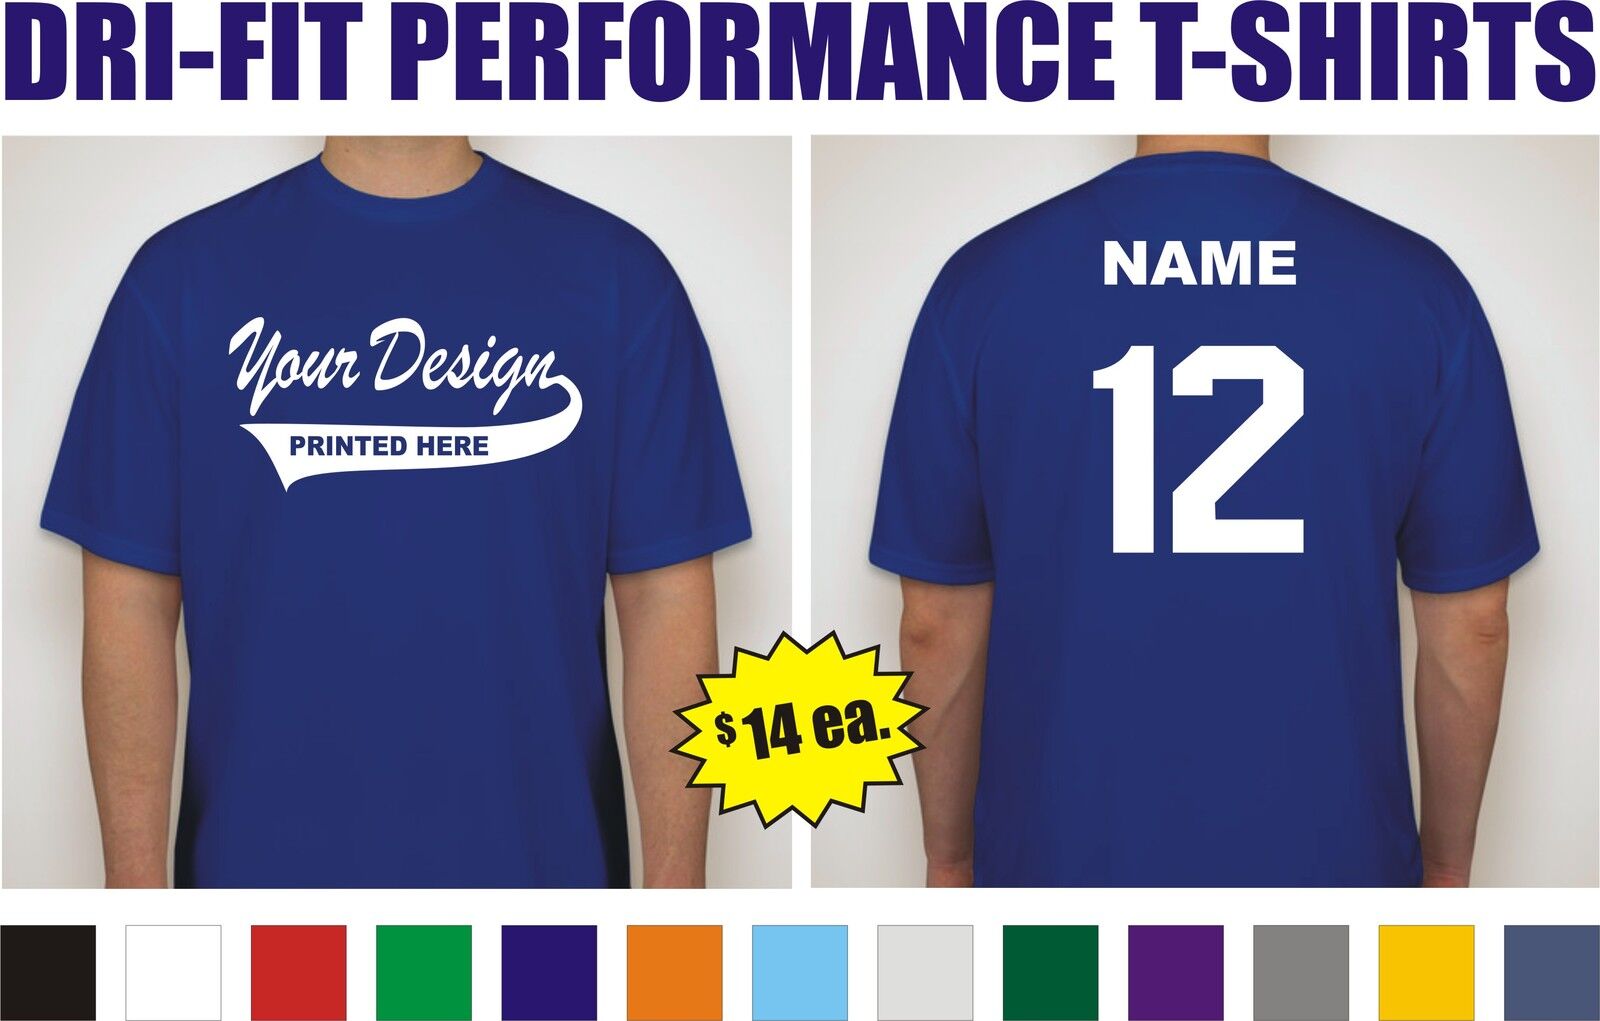 2 Custom Printed Dri-fit Moisture Wicking Baseball Team T-shirts